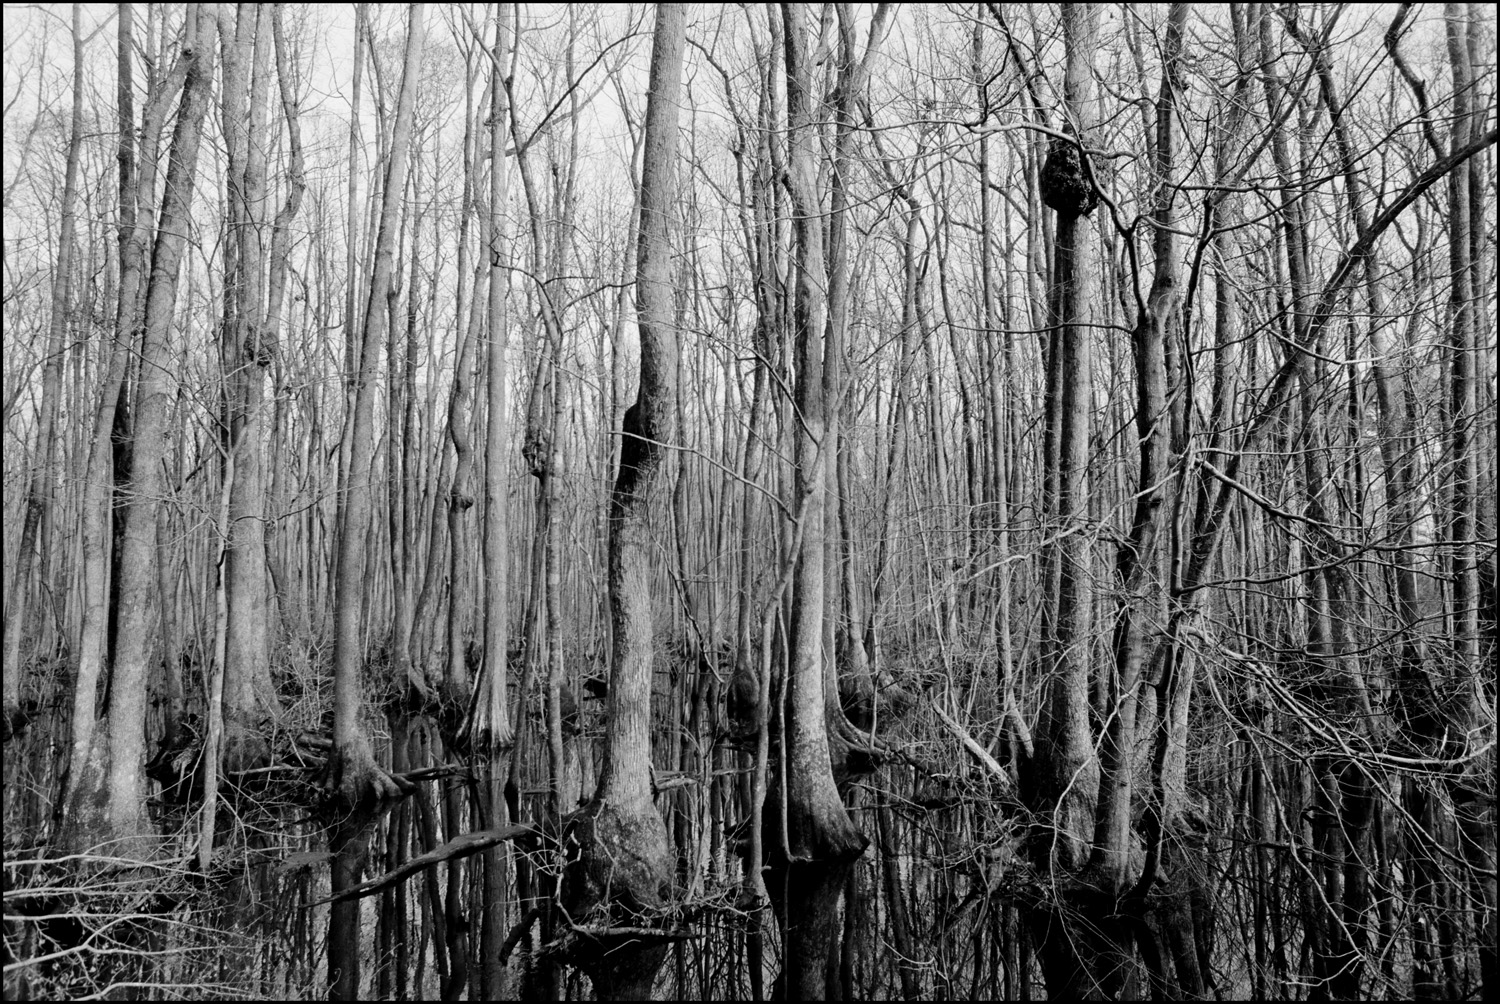 Trees growing in a marsh